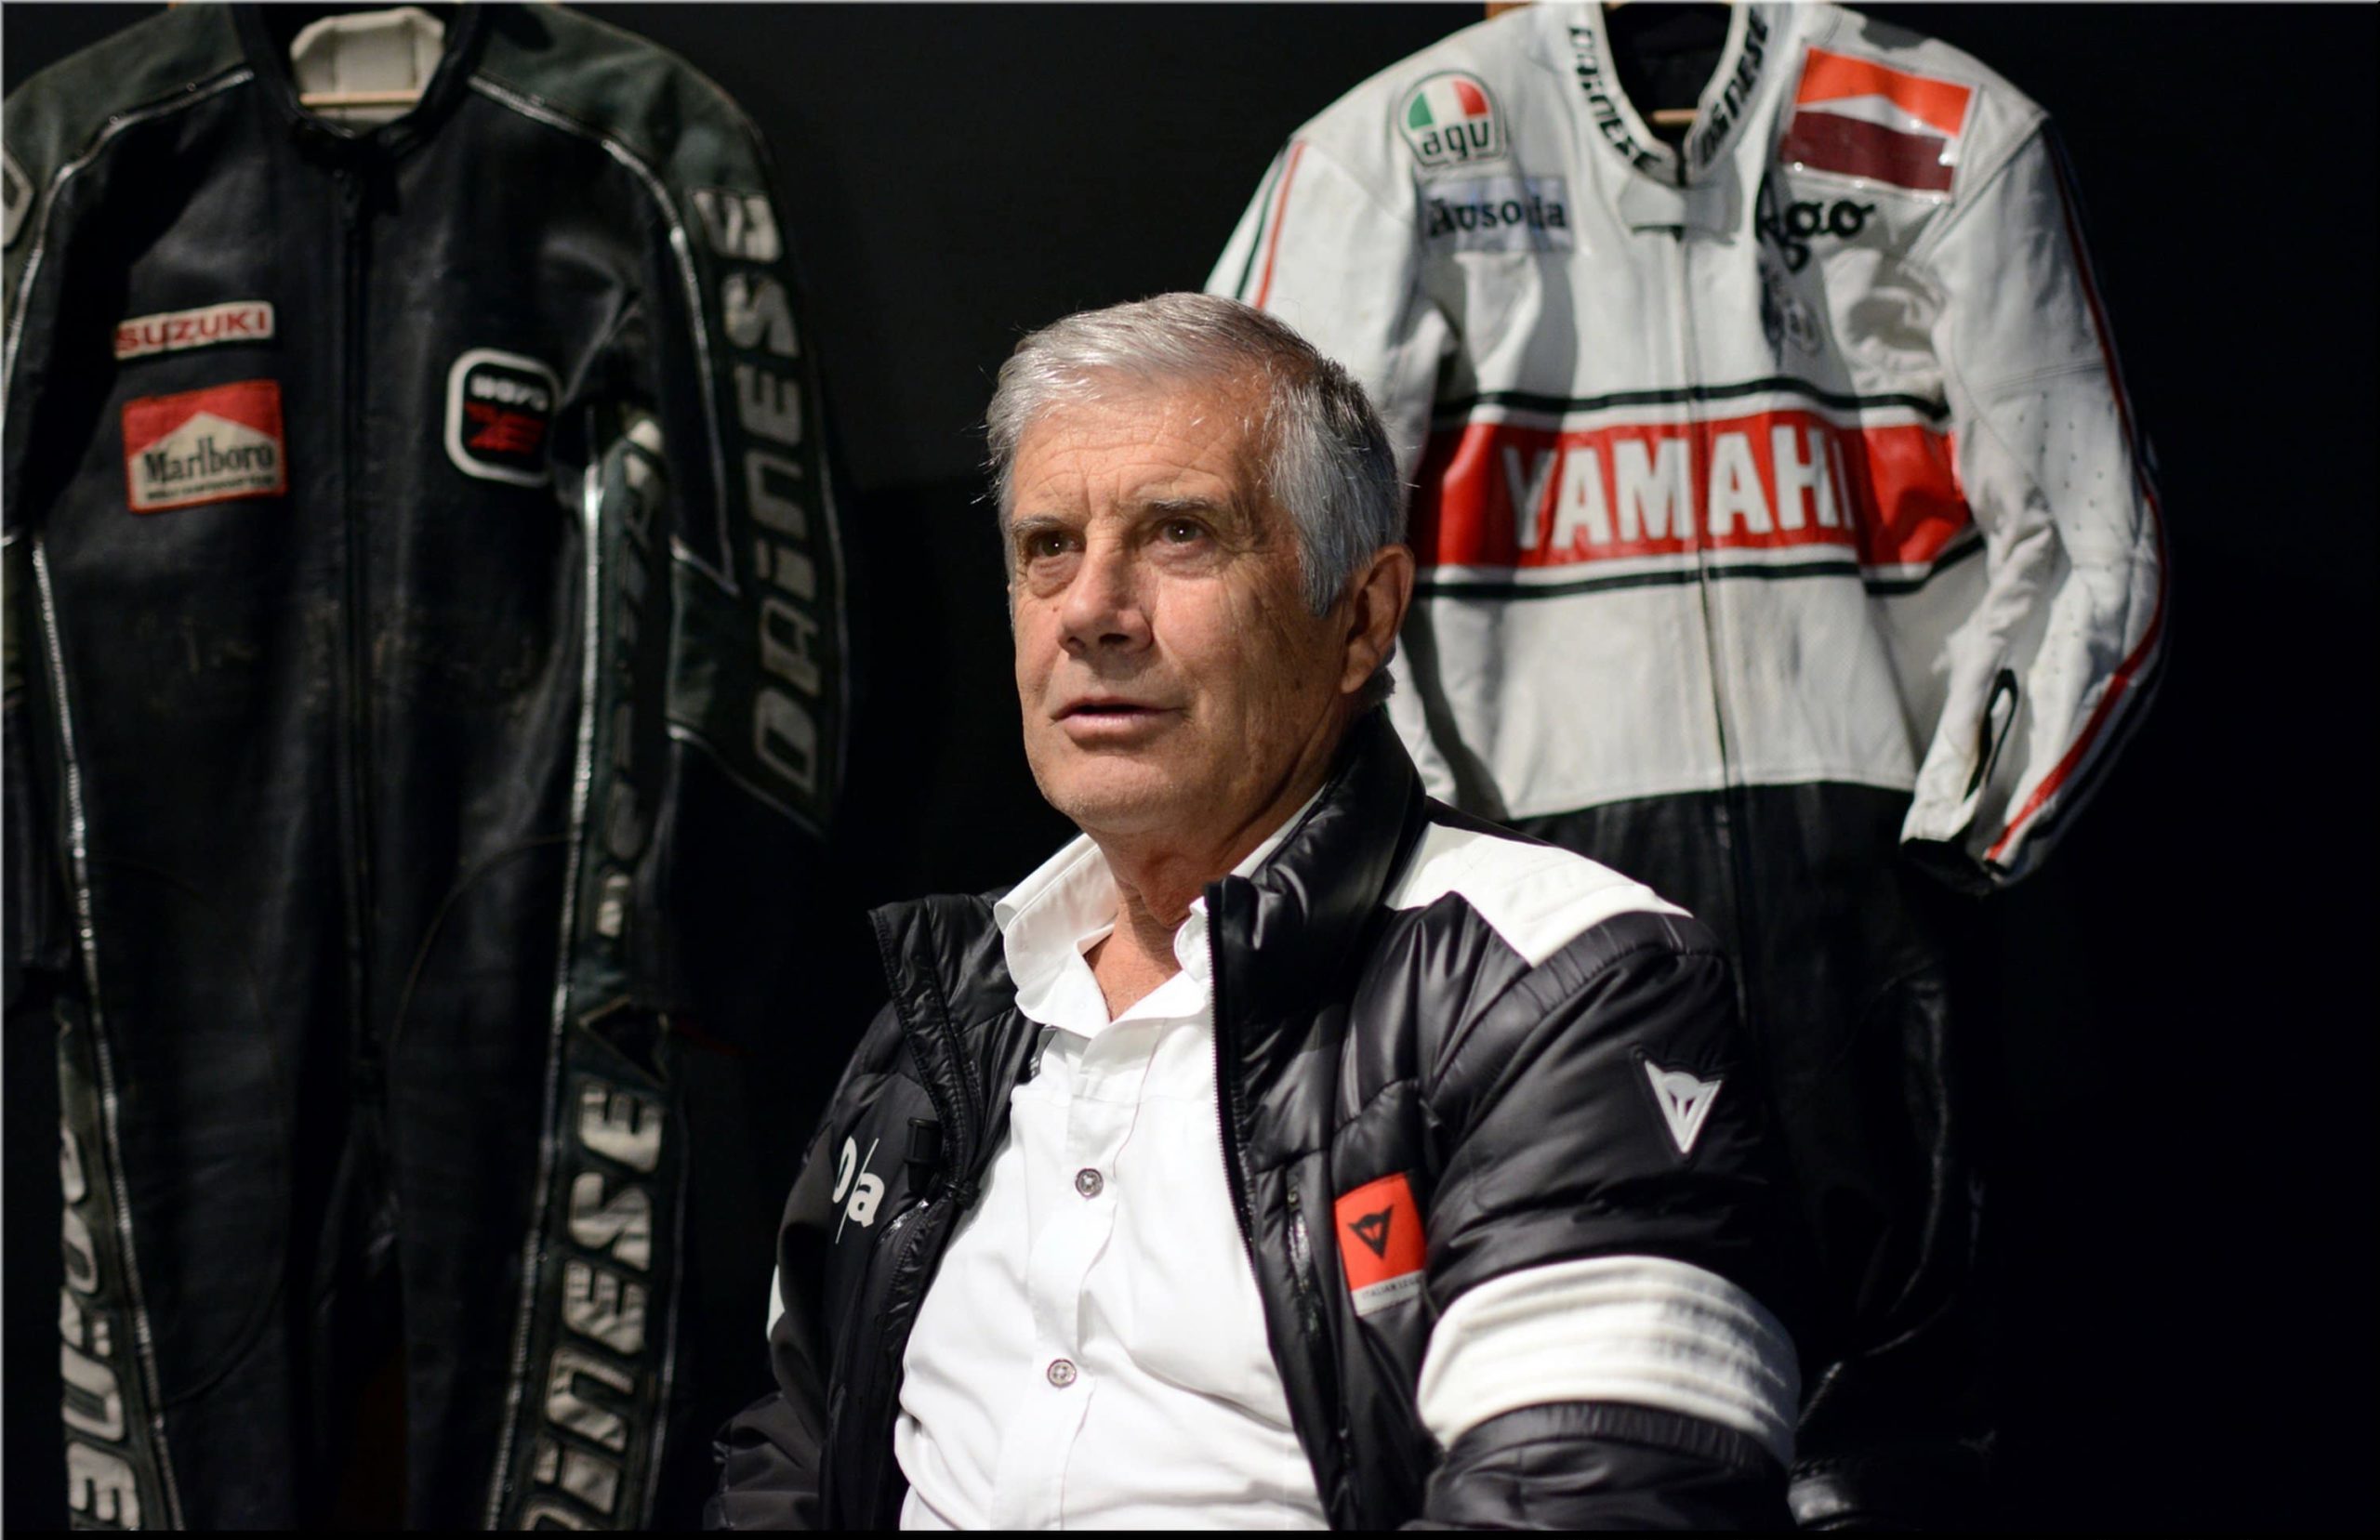 Giacomo Agostini en combi et autres équipements moto Dainese